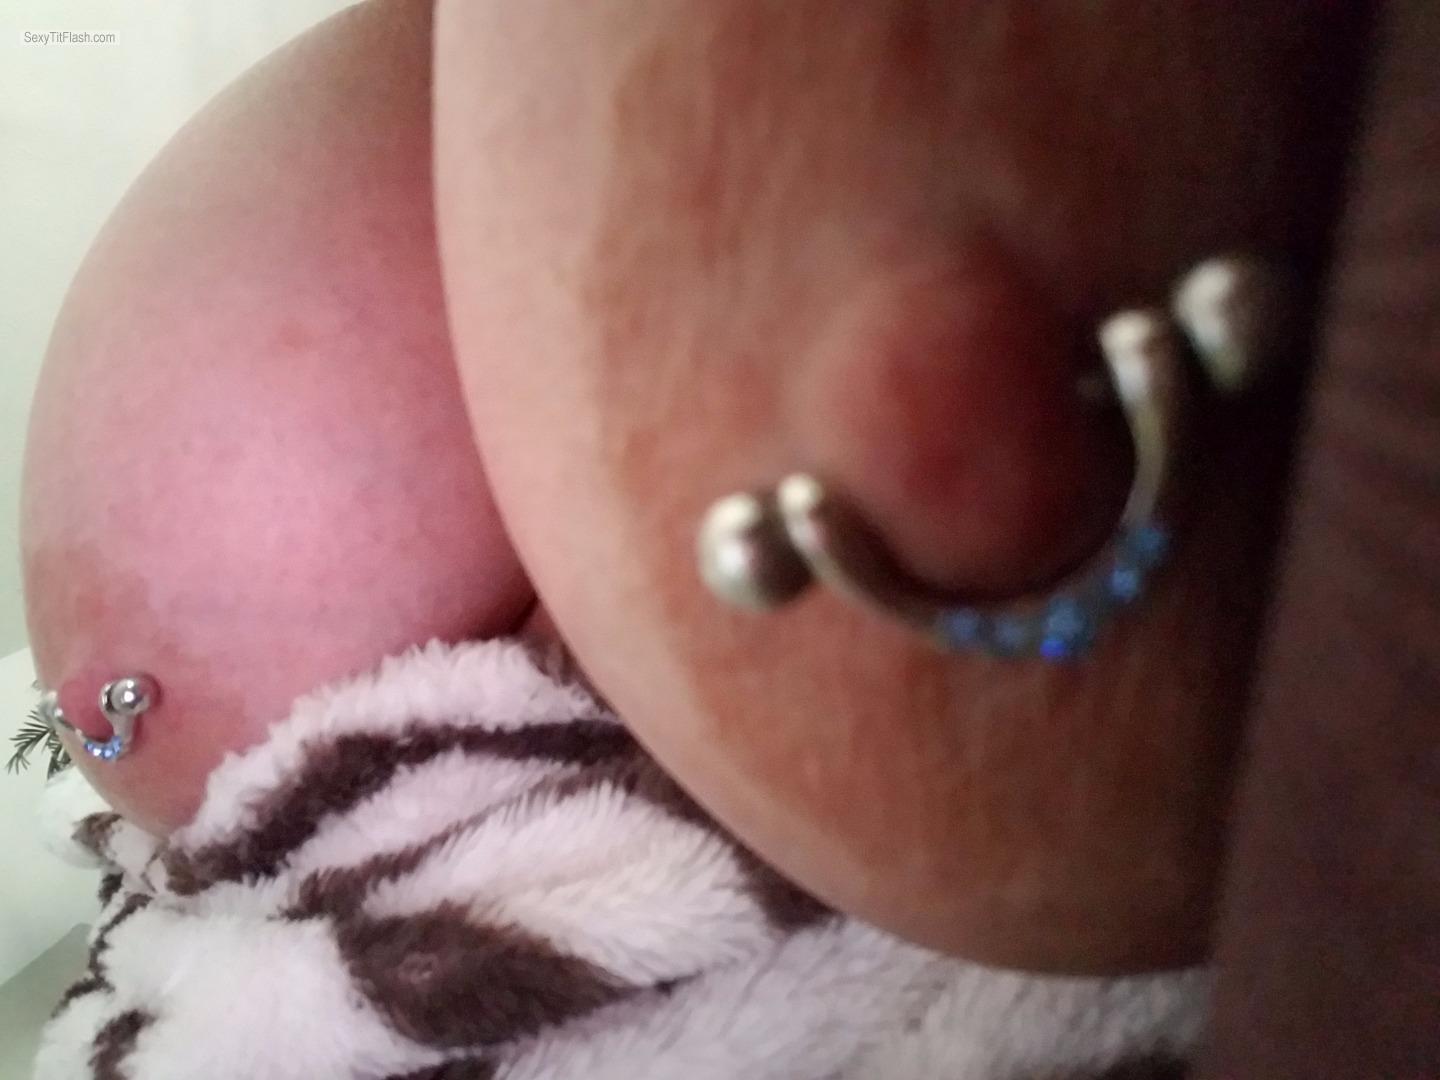 Tit Flash: My Very Big Tits (Selfie) - Northern Nips from United StatesPierced Nipples 